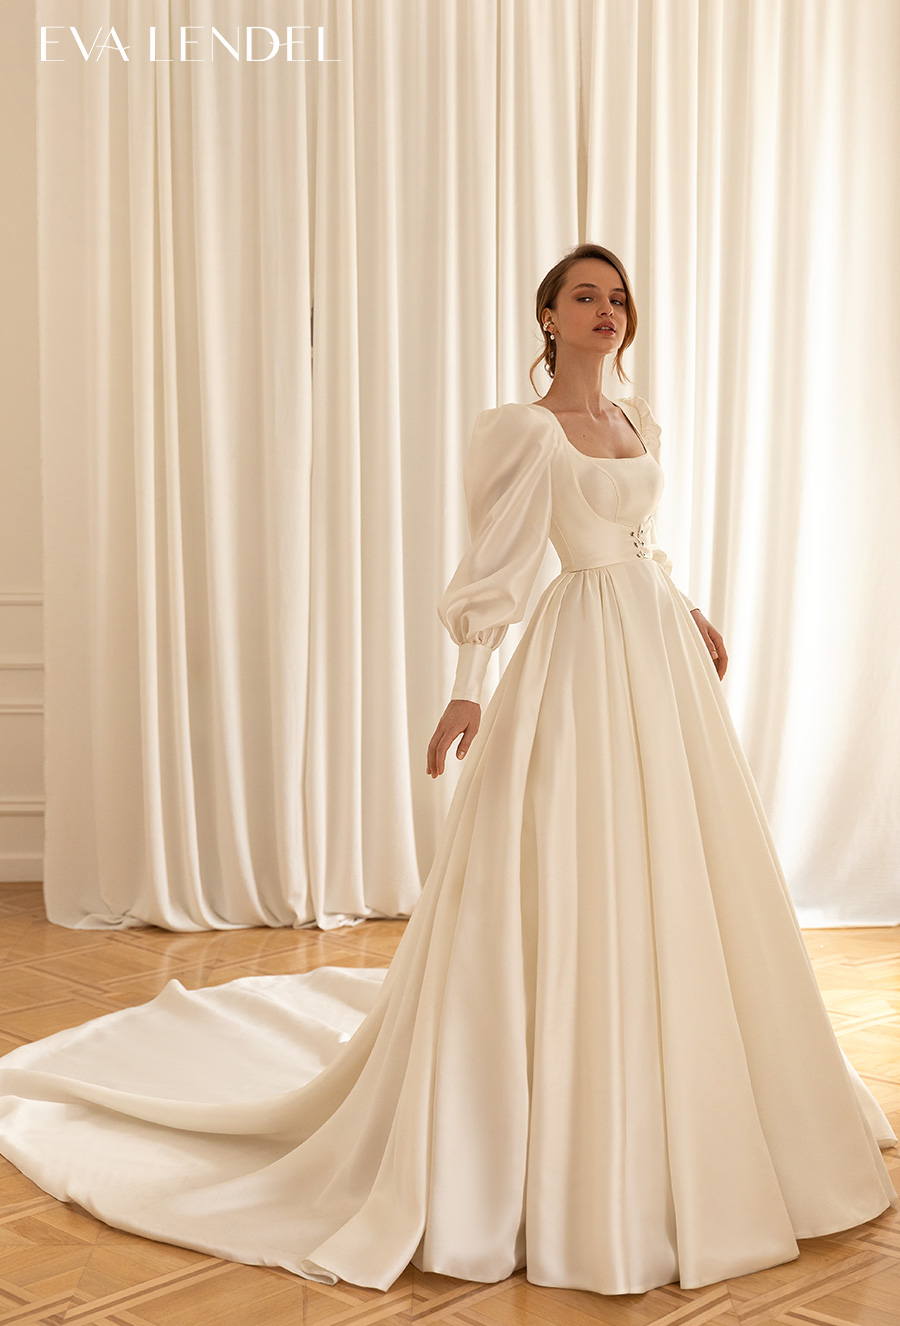 eva lendel 2022 bridal long bishop sleeves square neckline simple minimalist elegant a line wedding dress covered back chapel train (mary) mv